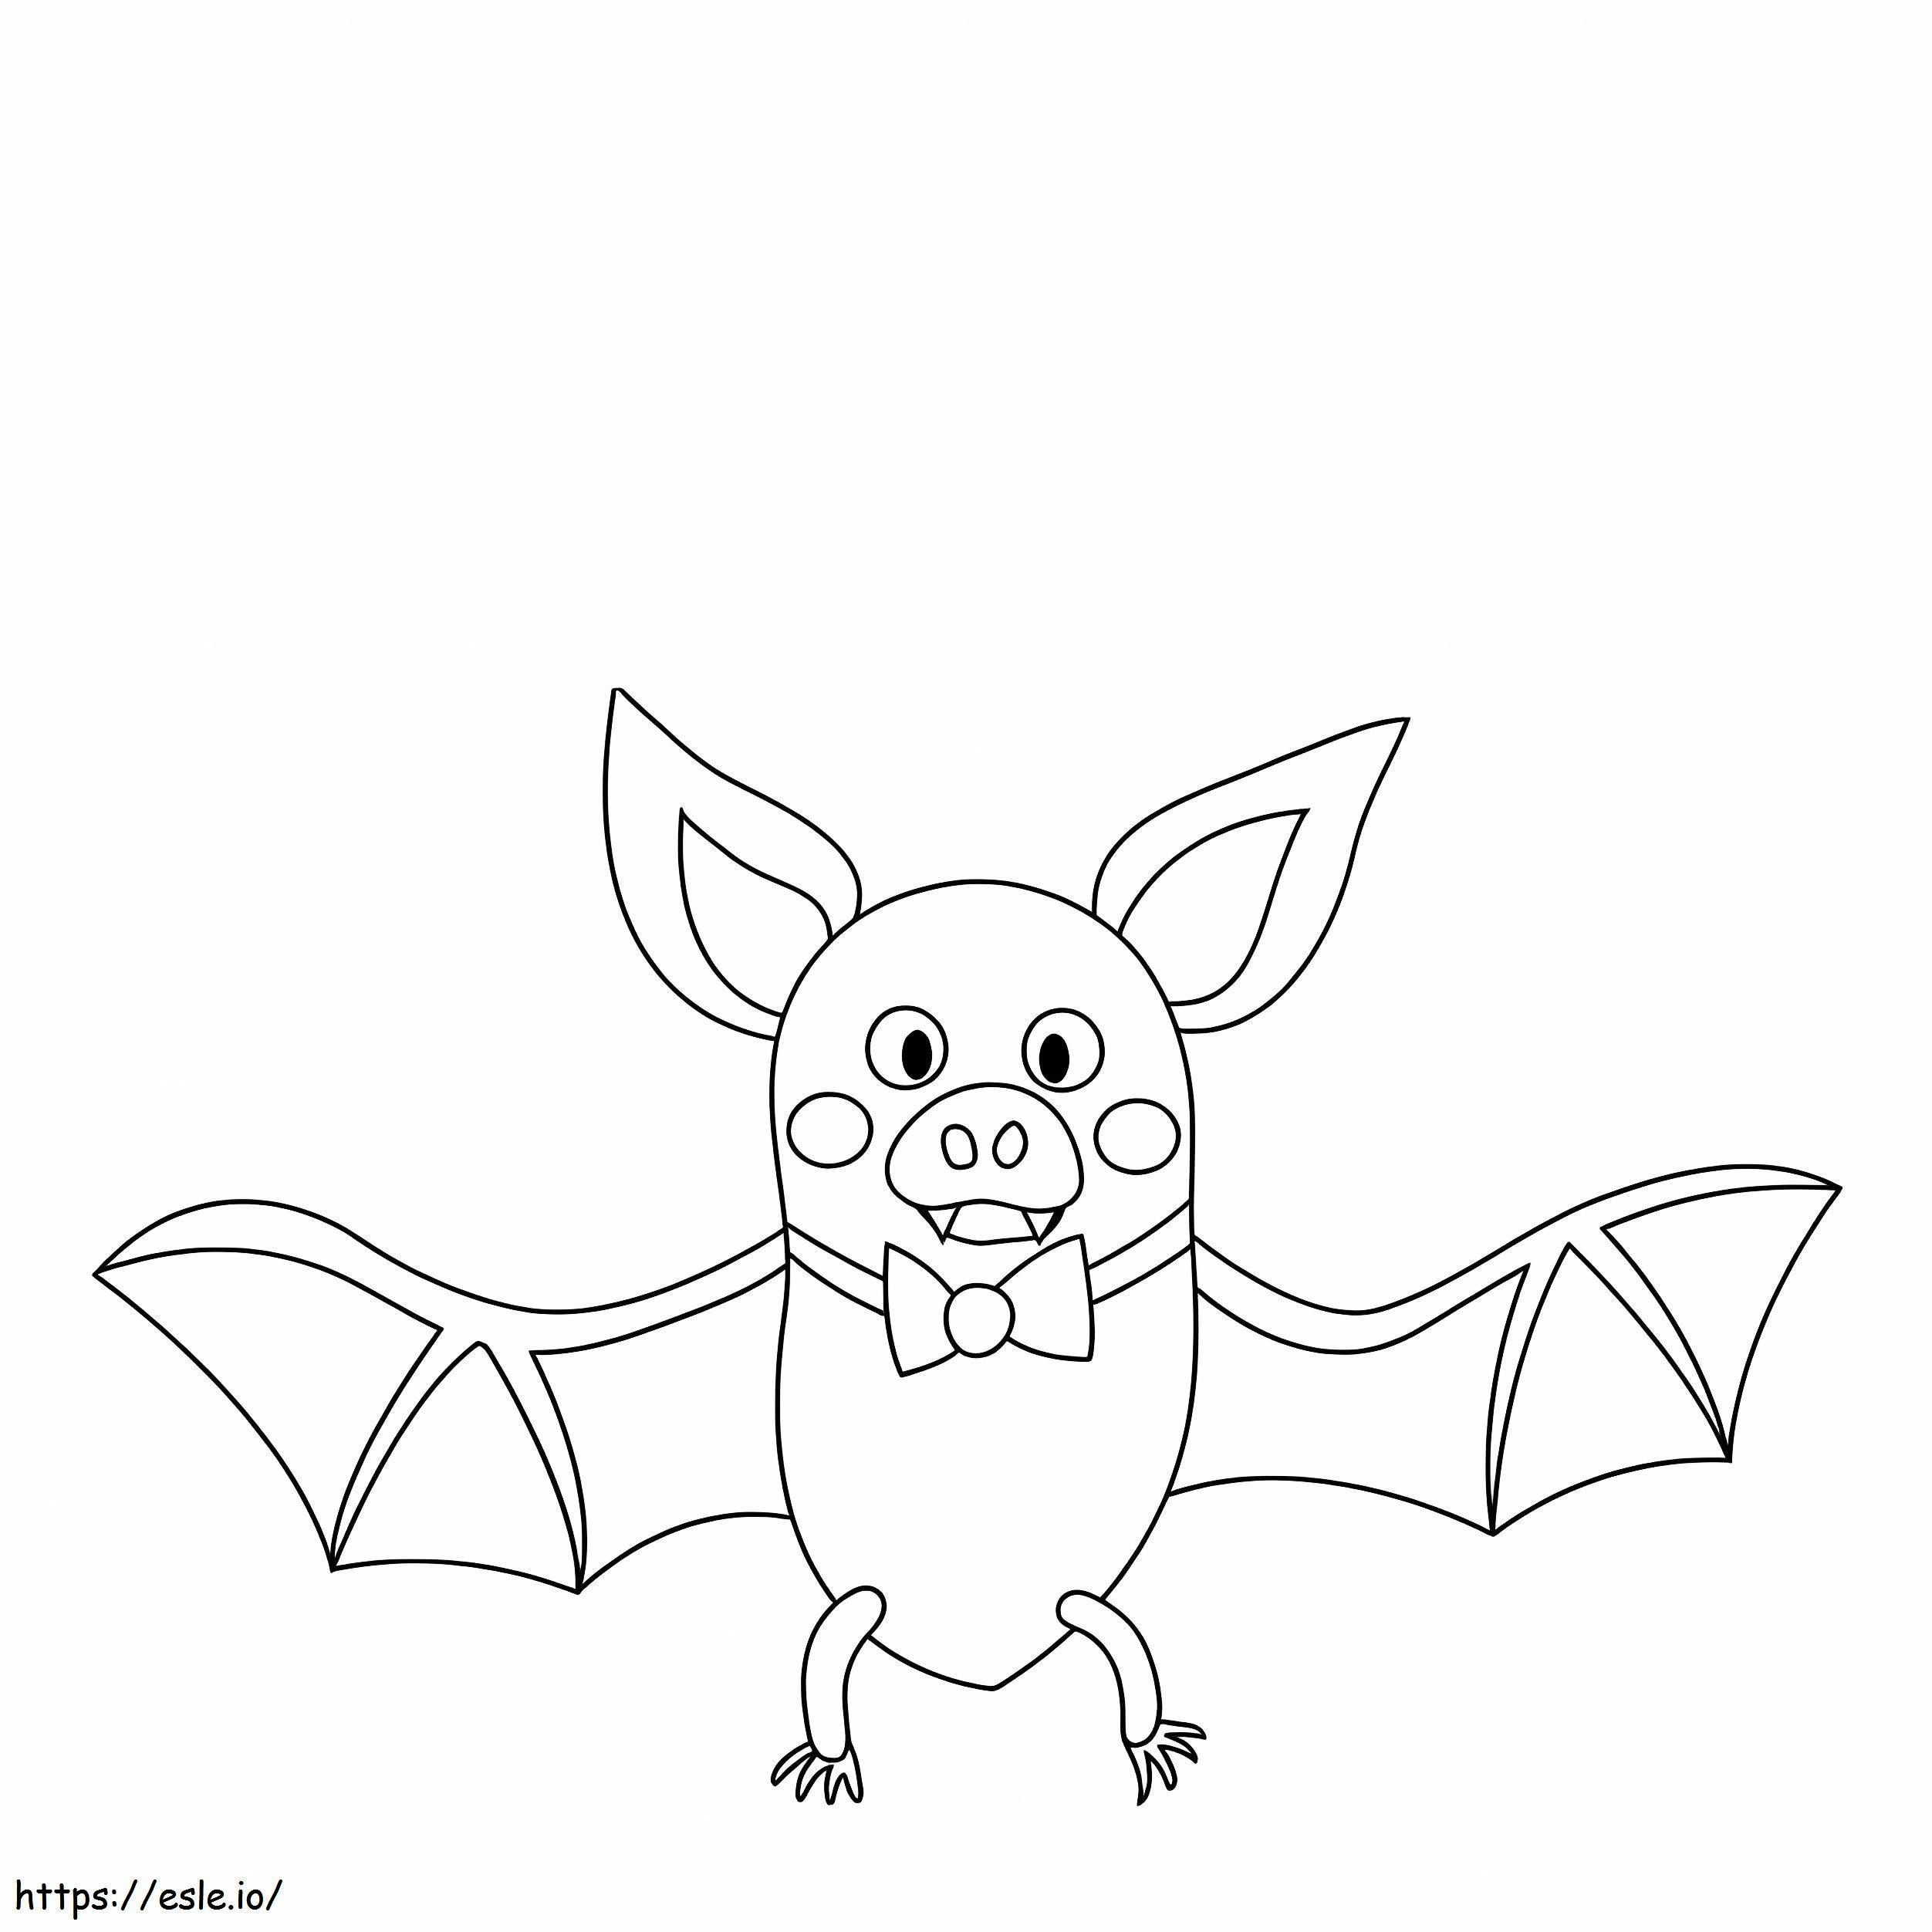 Bat Knight coloring page